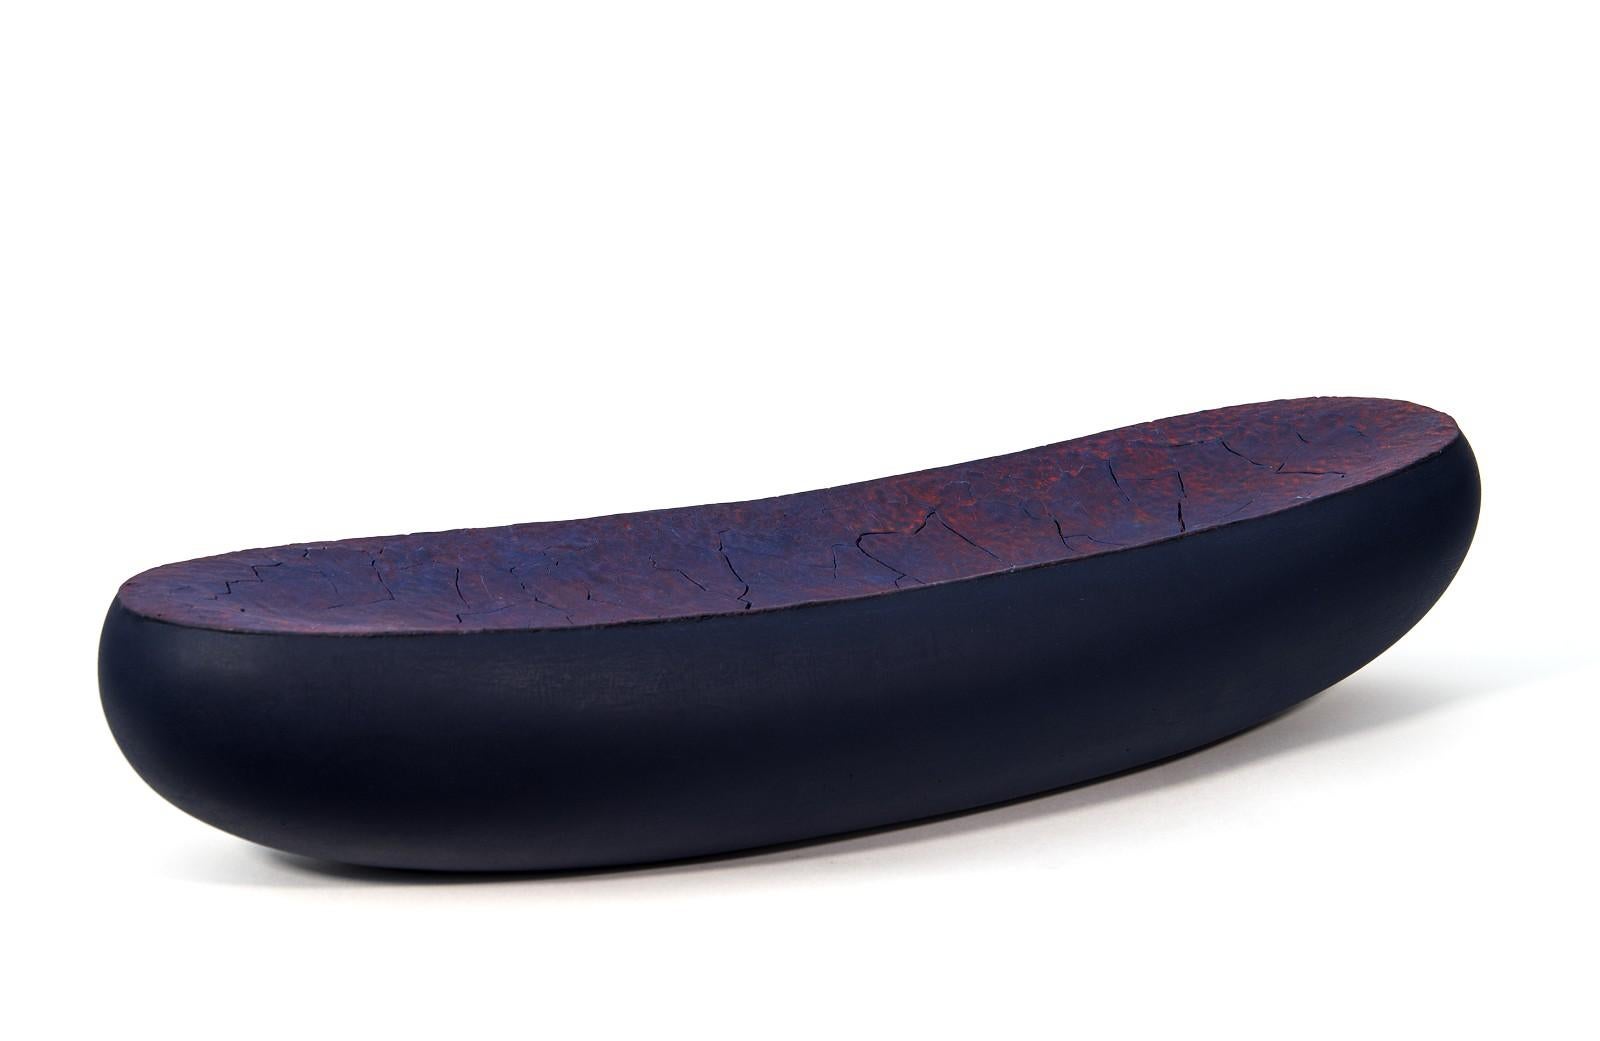 Ellesmere - black, purple, orange, textured, ceramic tabletop vessel - Sculpture by Steven Heinemann